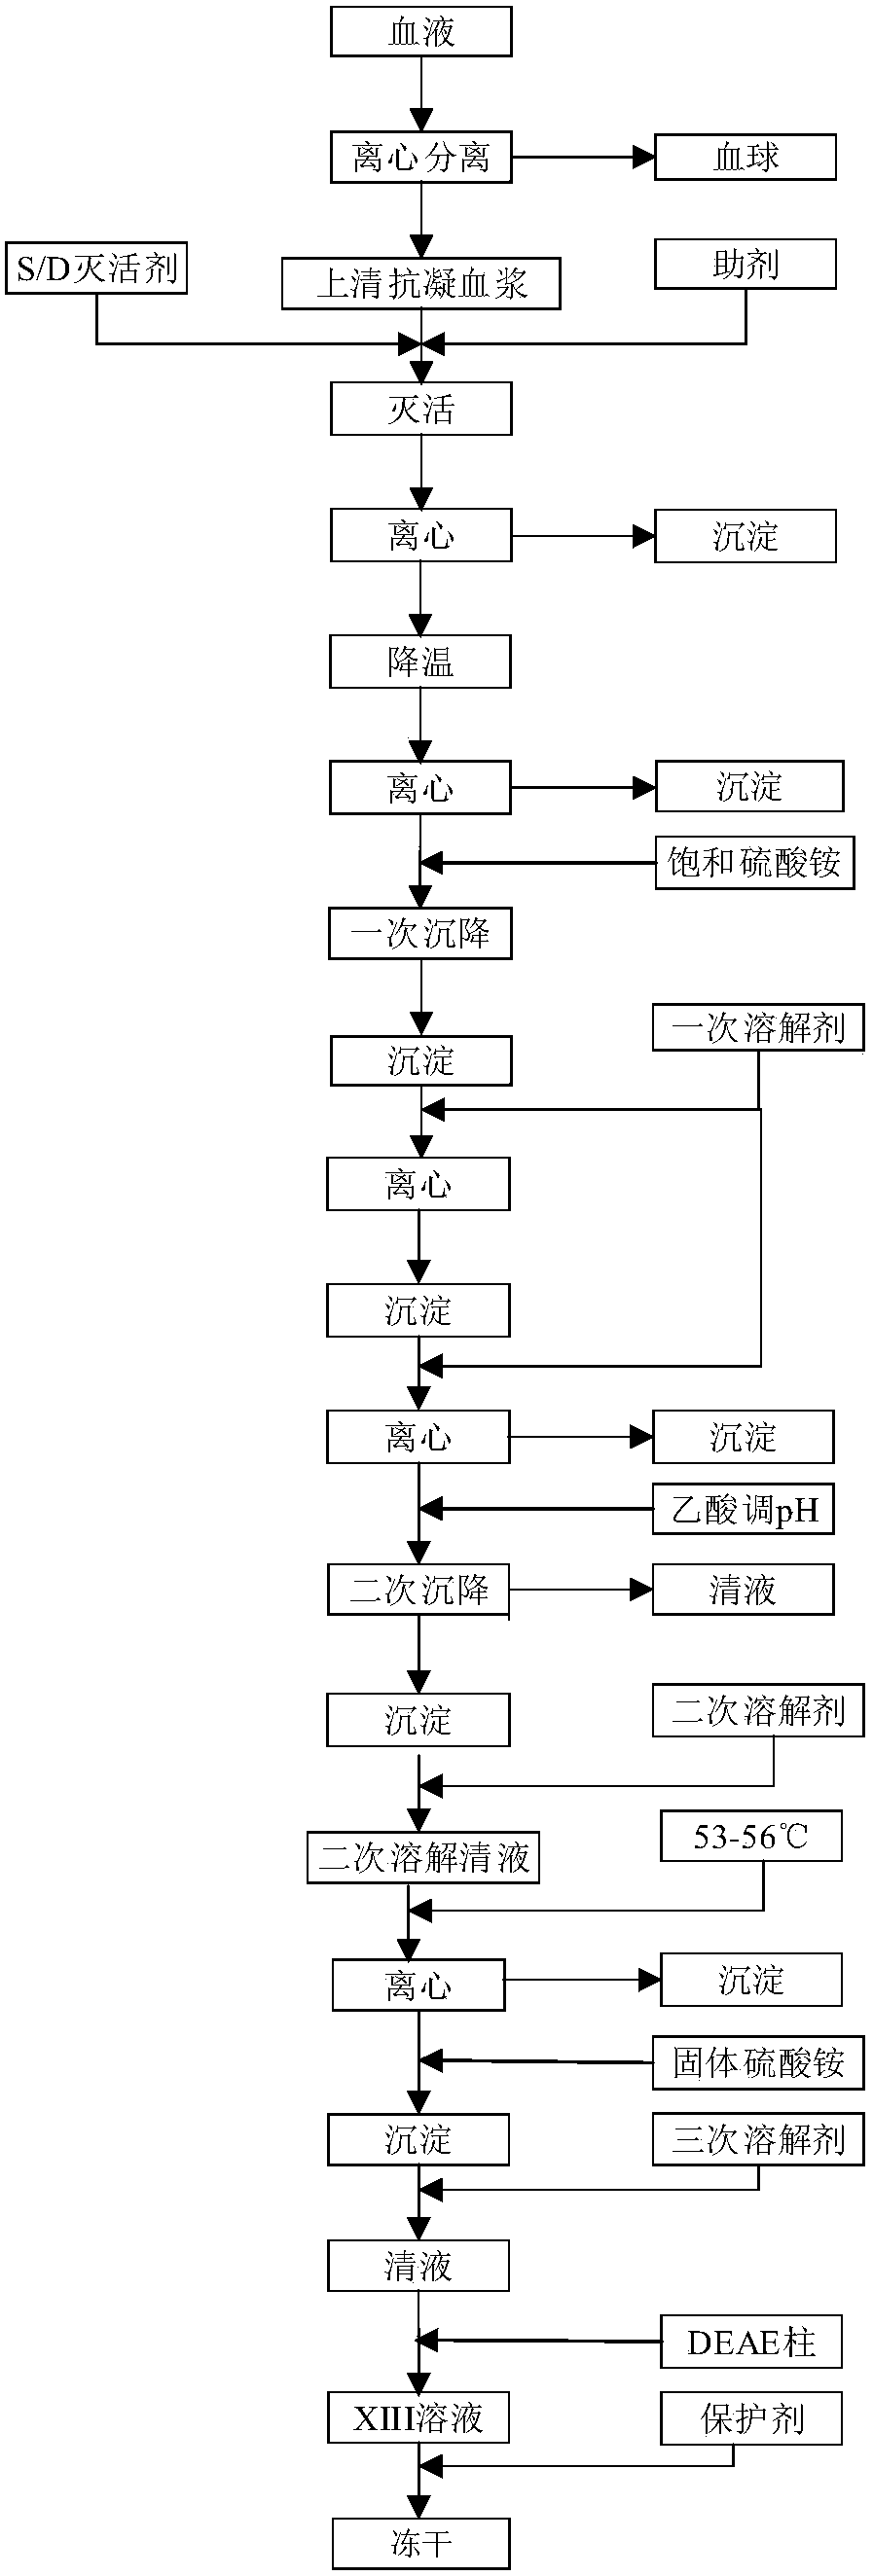 Preparation method of coagulation factor xiii